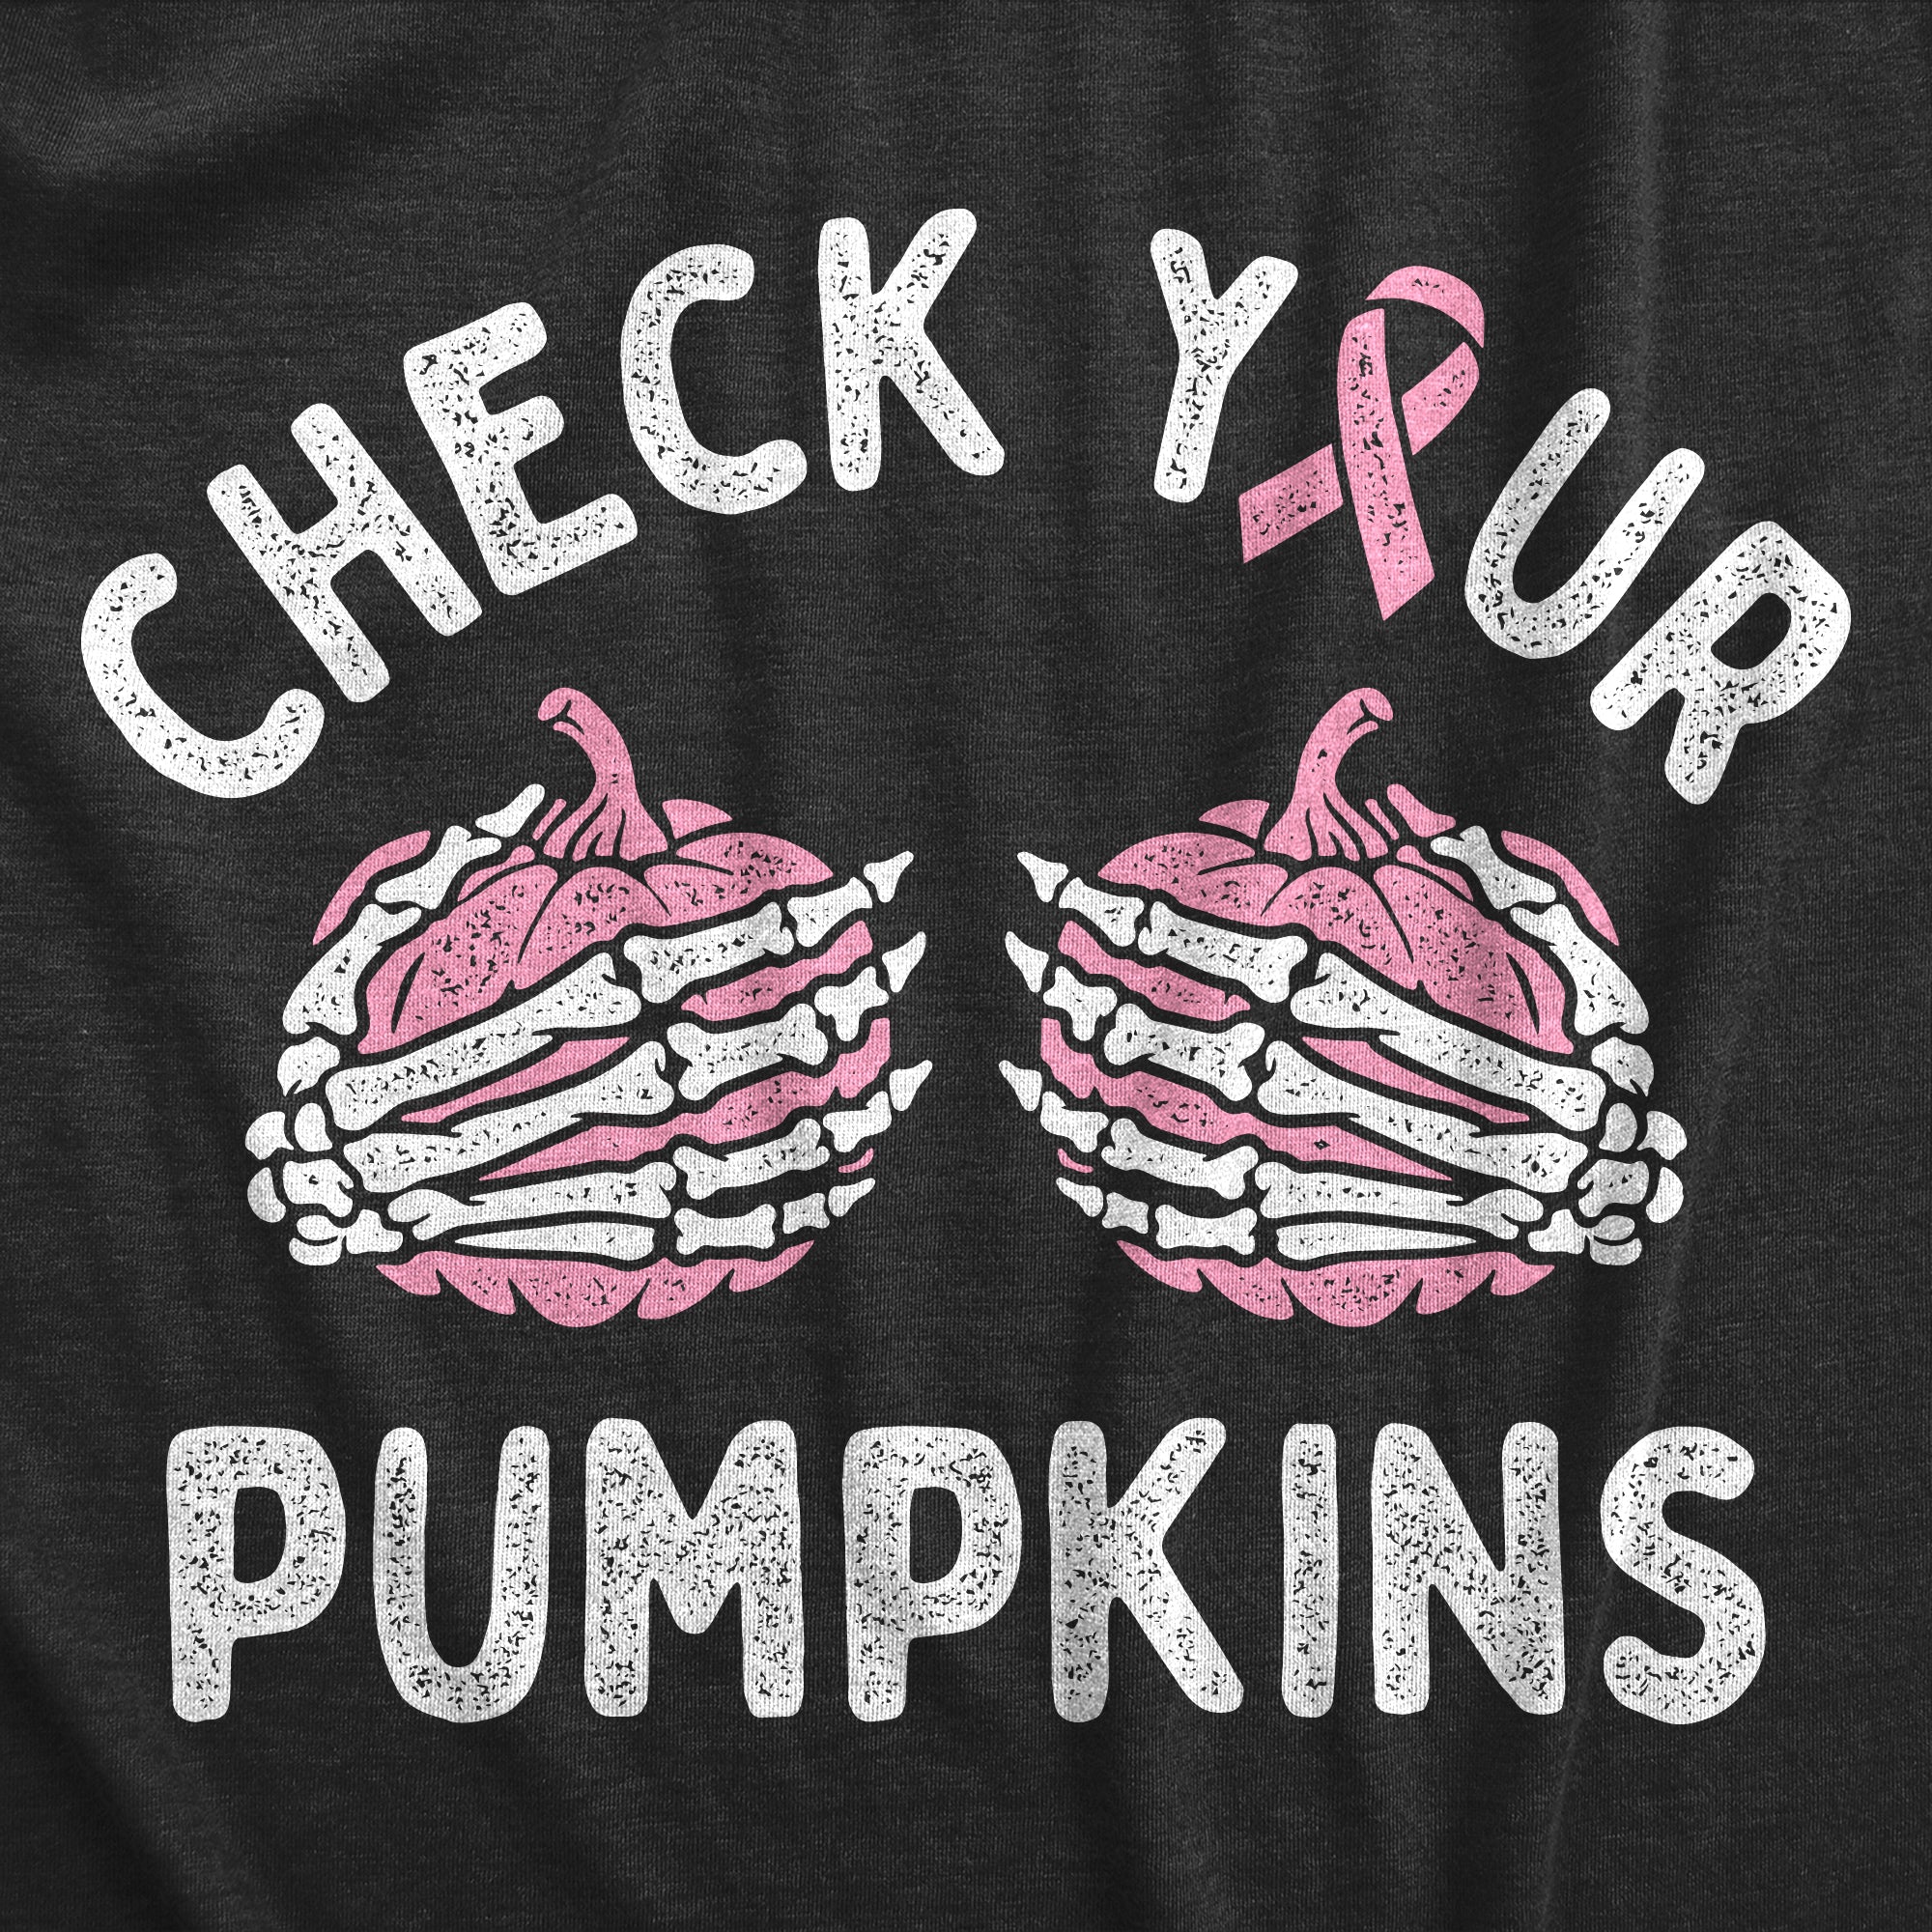 Funny Heather Black - PUMPKINS Check Your Pumpkins Womens T Shirt Nerdy Halloween Tee